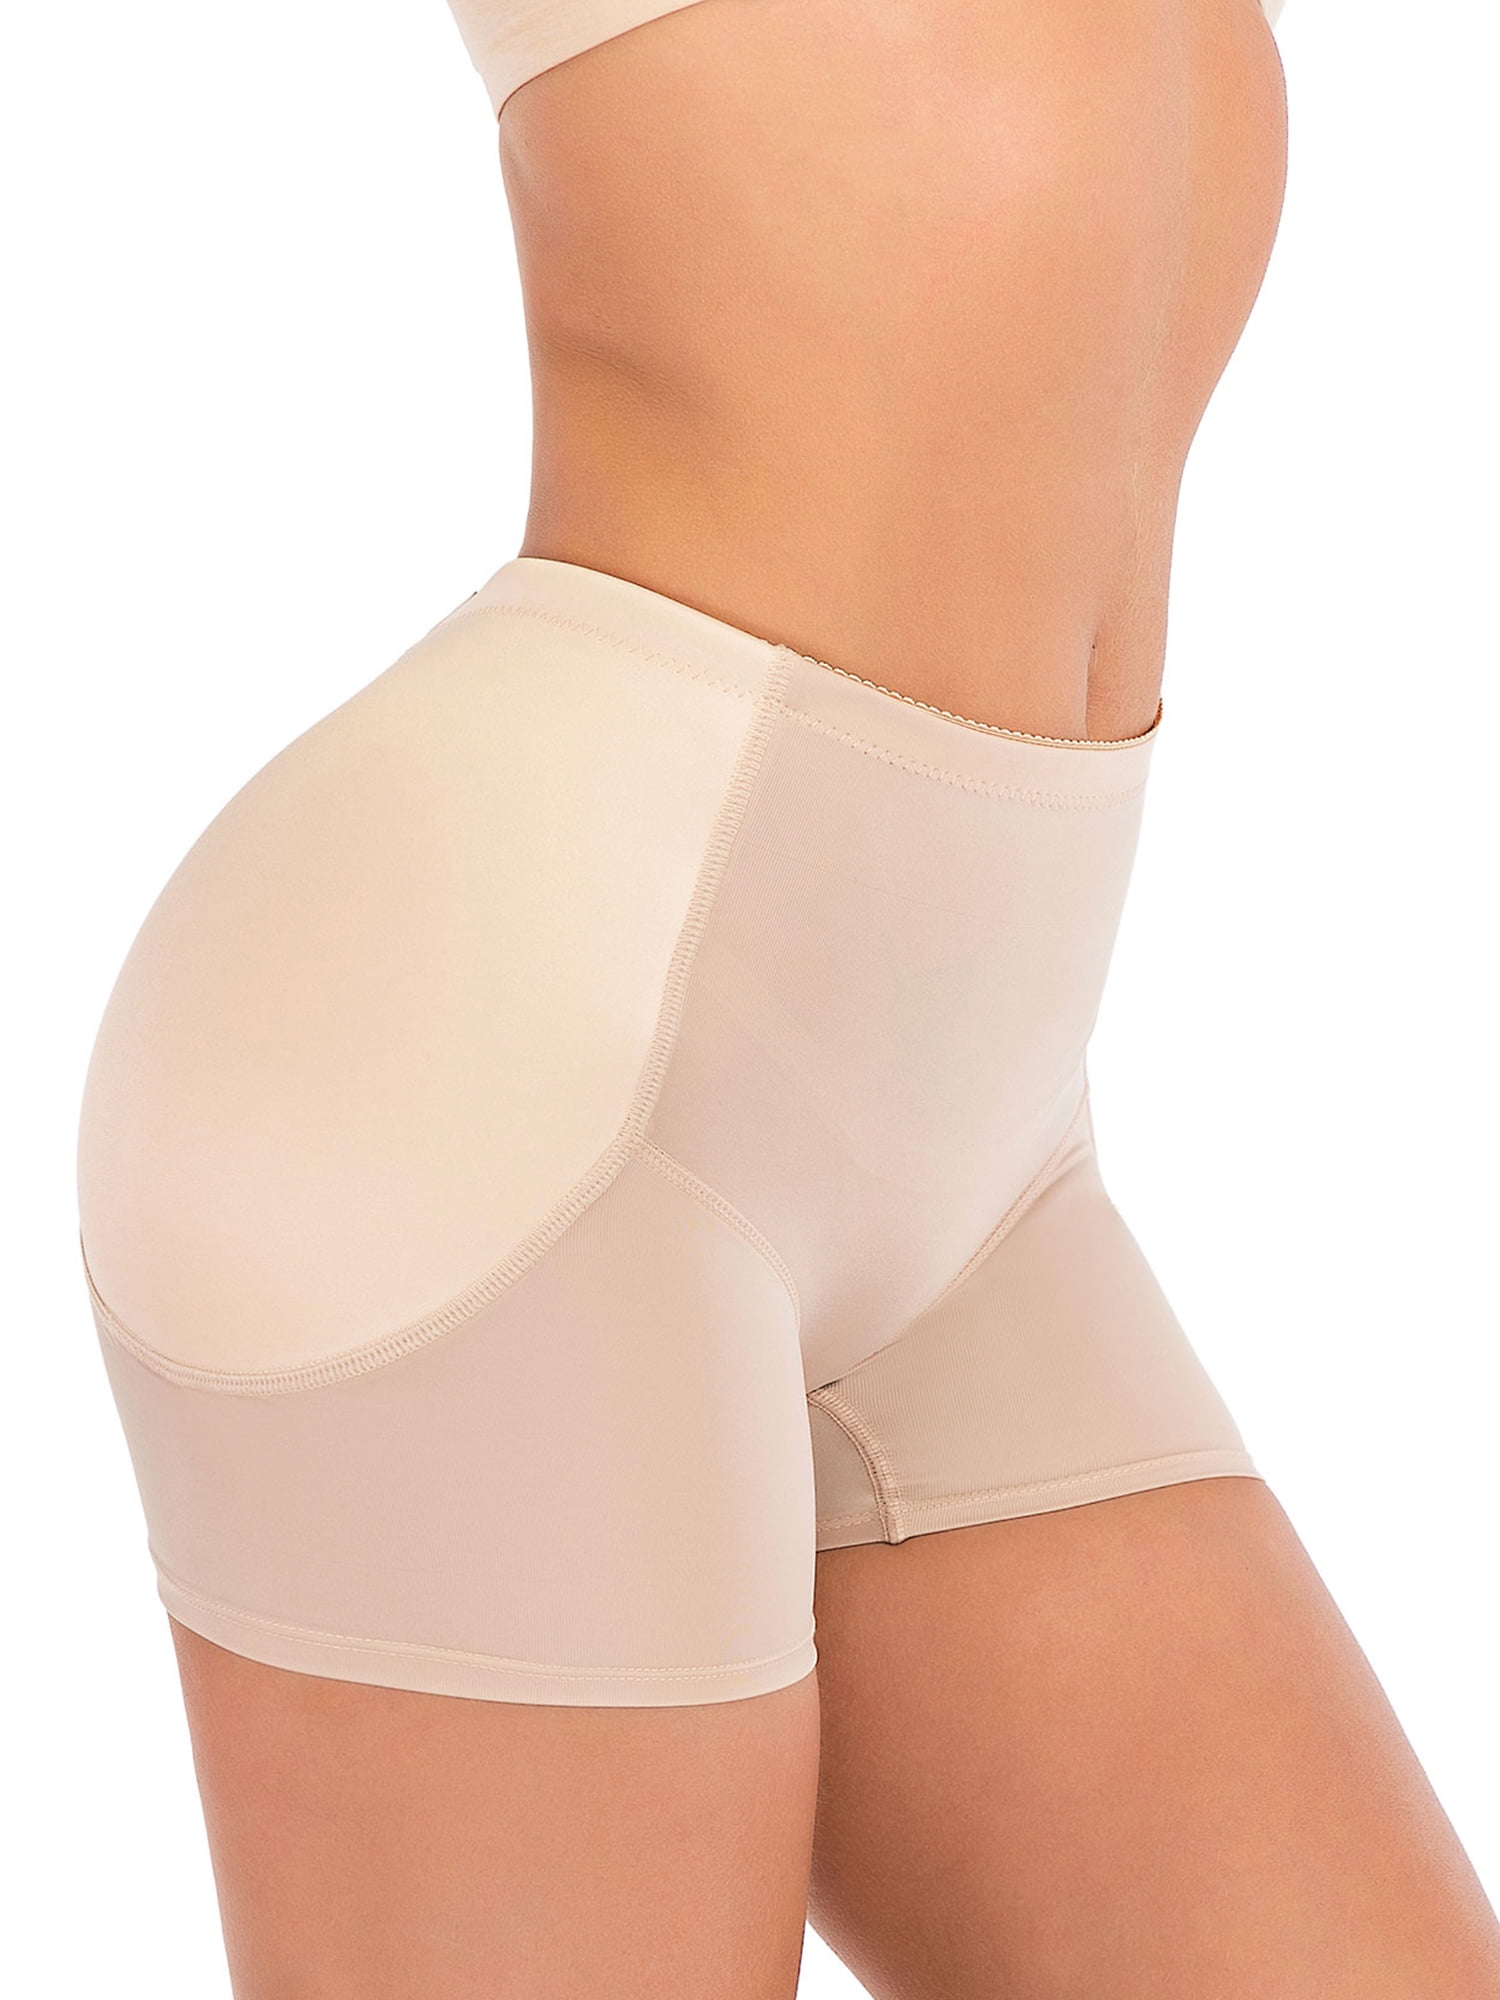 Beige# DODOING Fake Butt Lifter Pants Lace Hip Enhancer Pads Underwear L 